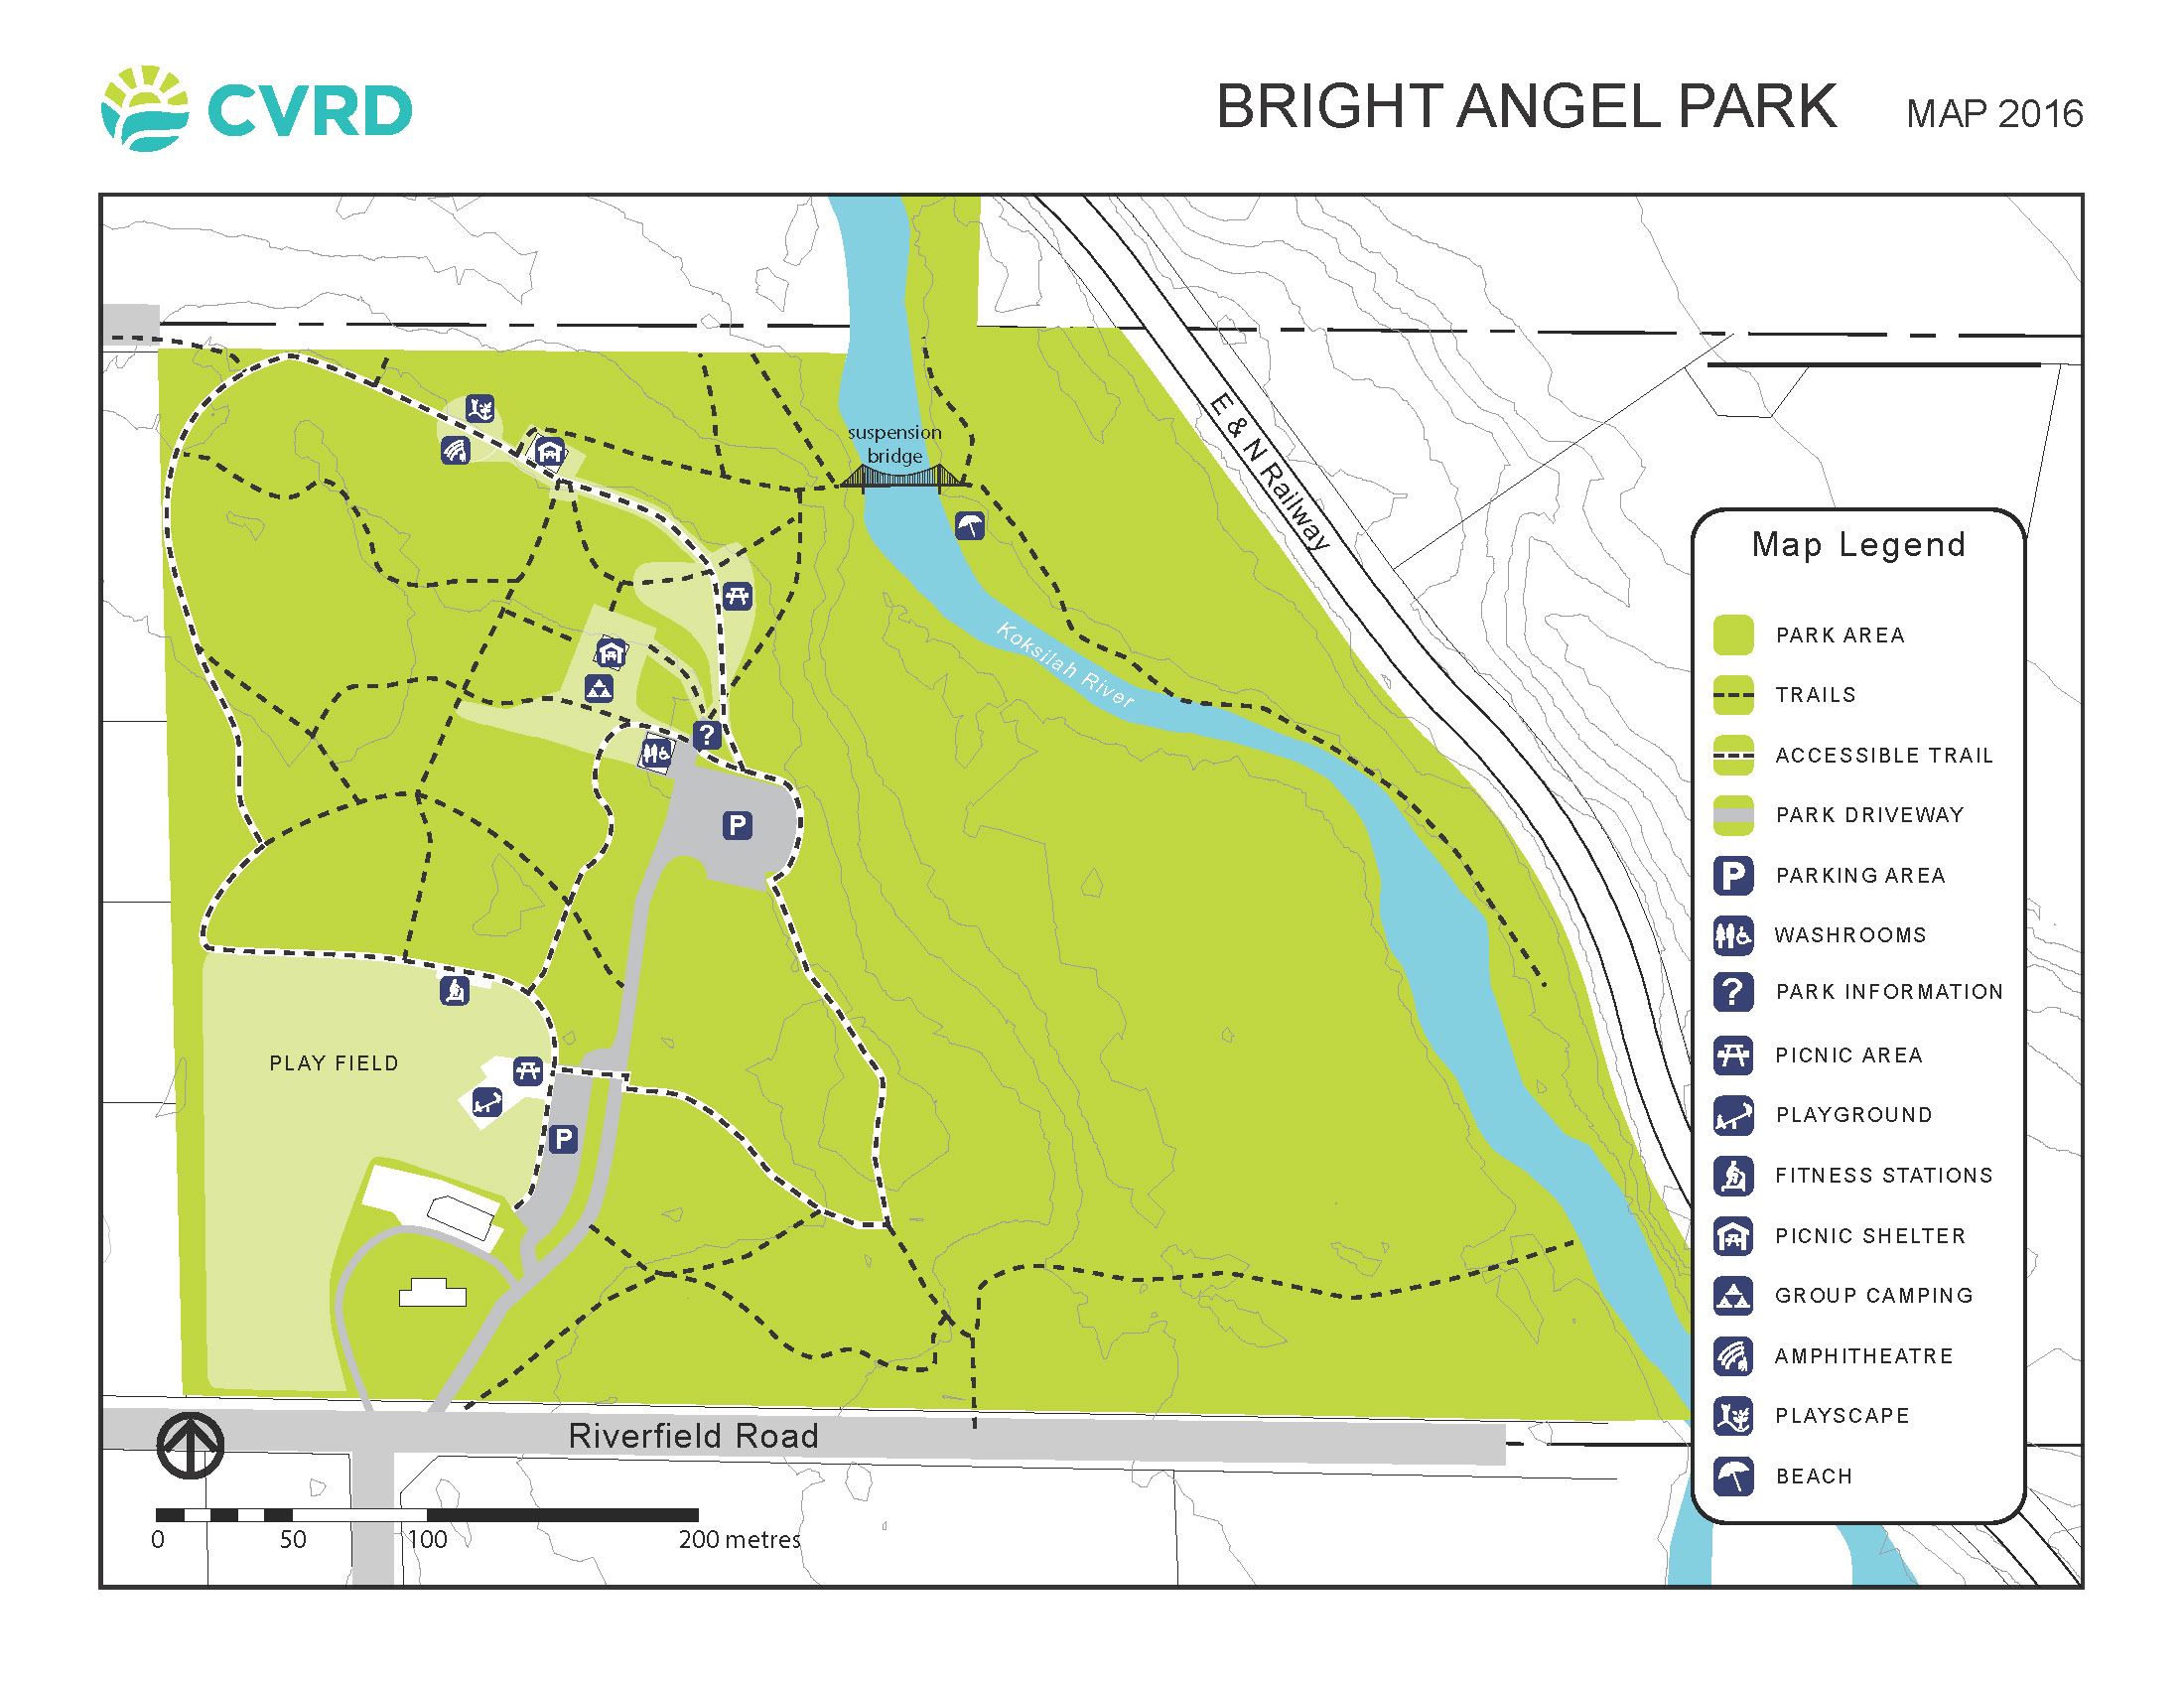 Bright Angel Park Map 2016